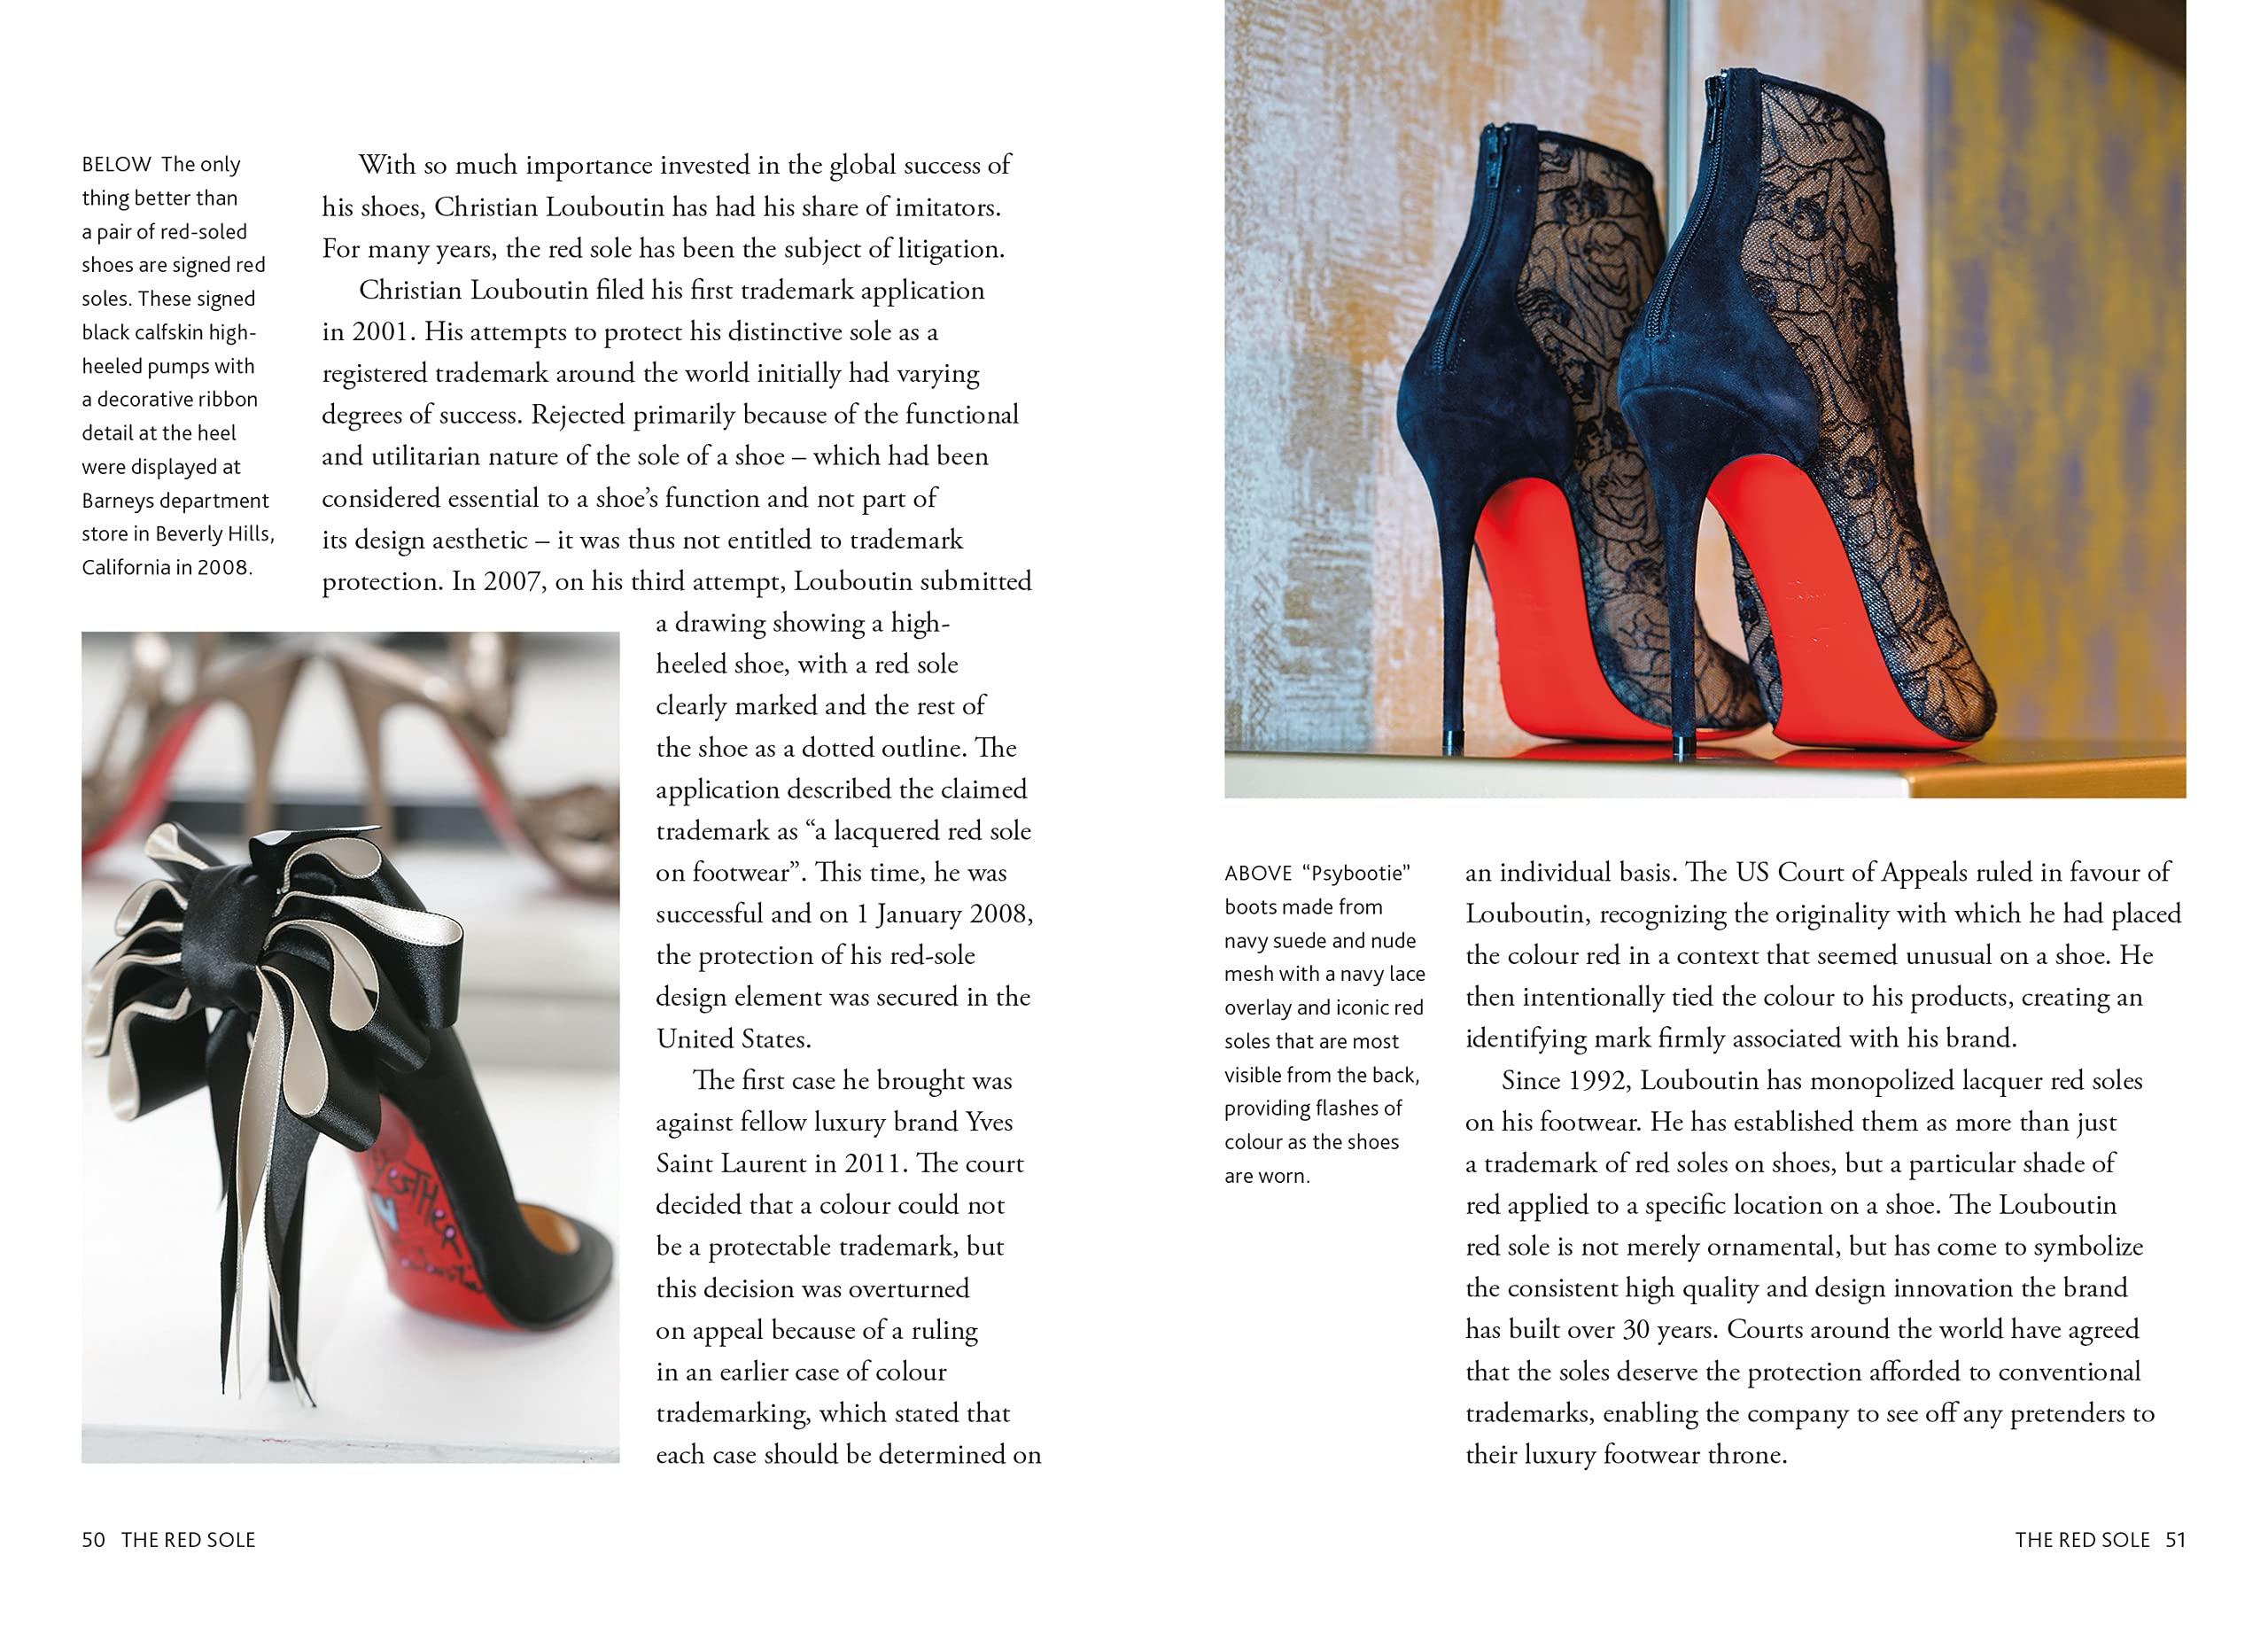 LITTLE BOOK OF CHRISTIAN LOUBOUTIN アイコニックな靴デザイナー、クリスチャン・ルブタンの物語